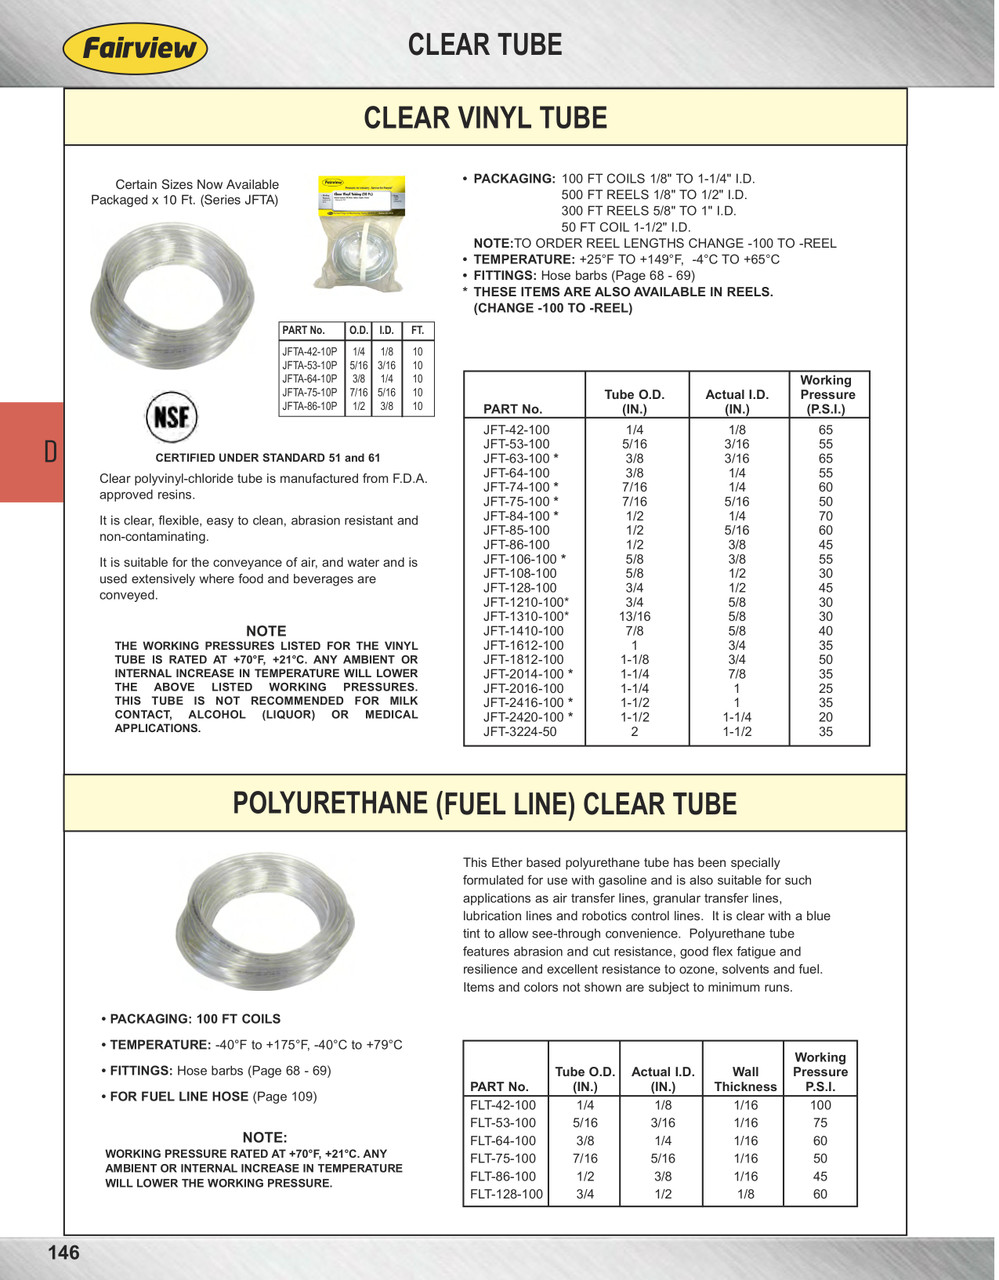 1-1/2 x 1-1/4" x 100' Clear PVC Non-Reinforced Hose  JFT-2420-100